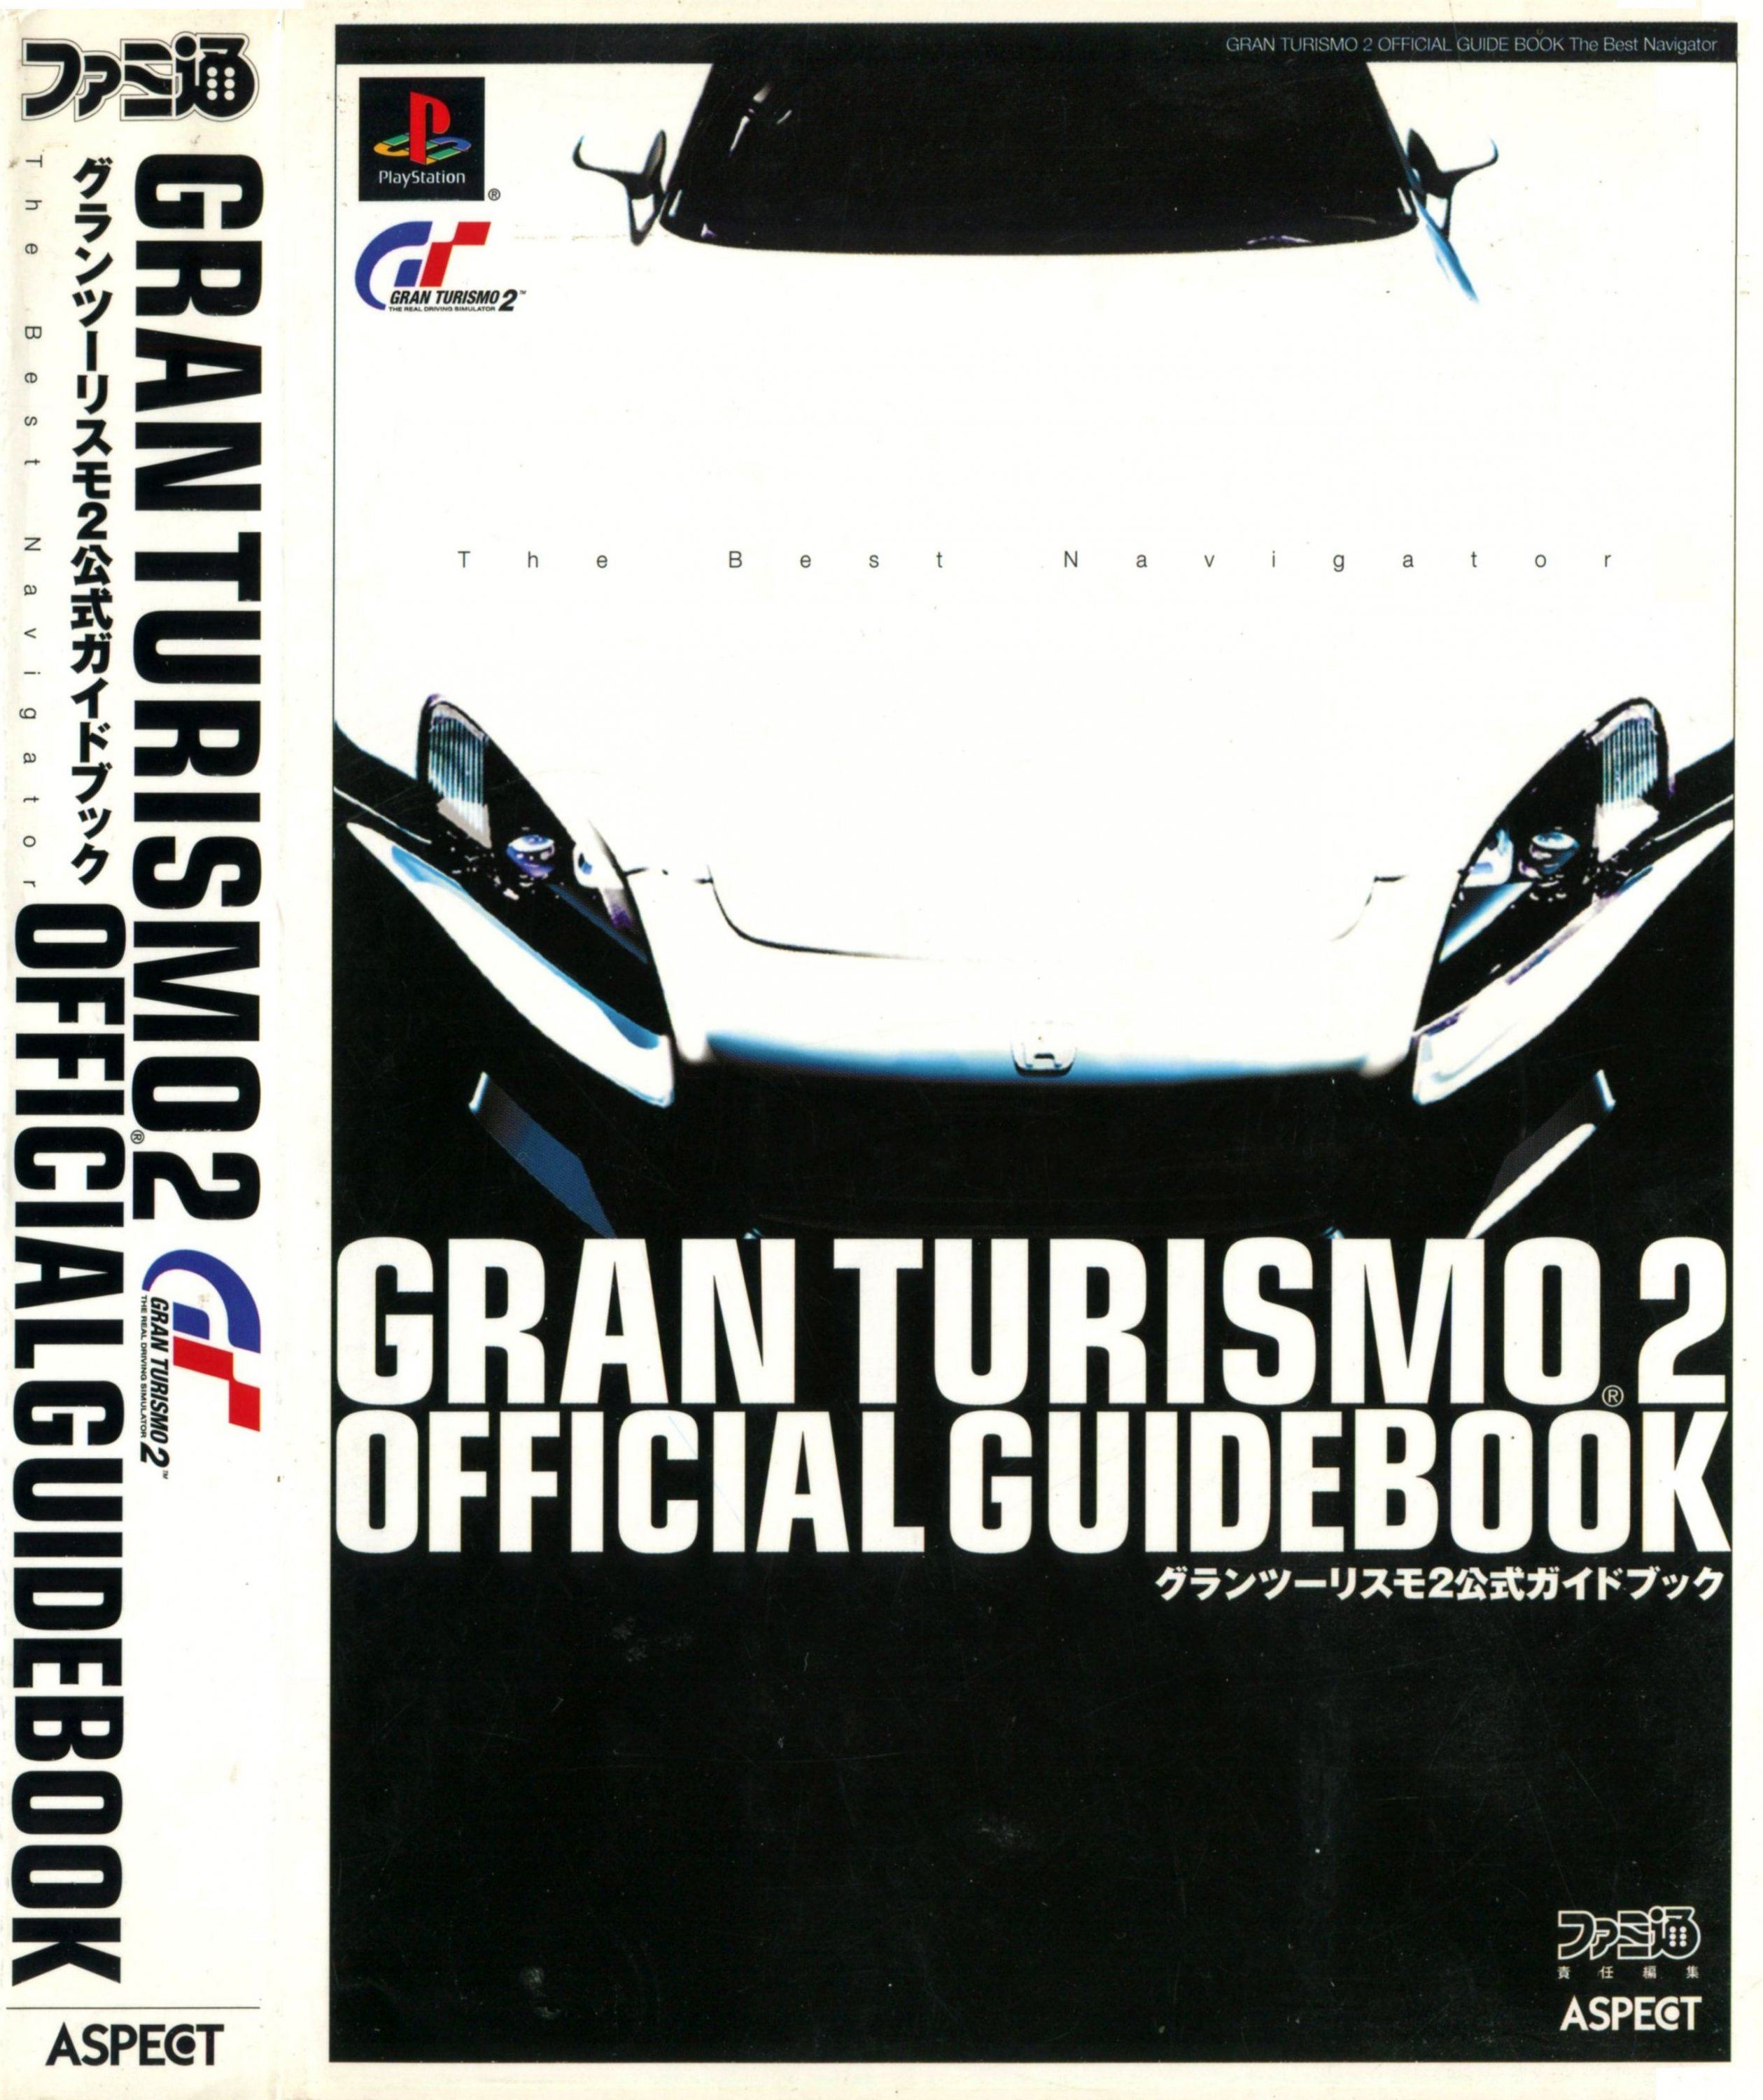 Gran Turismo 2 Official Guidebook